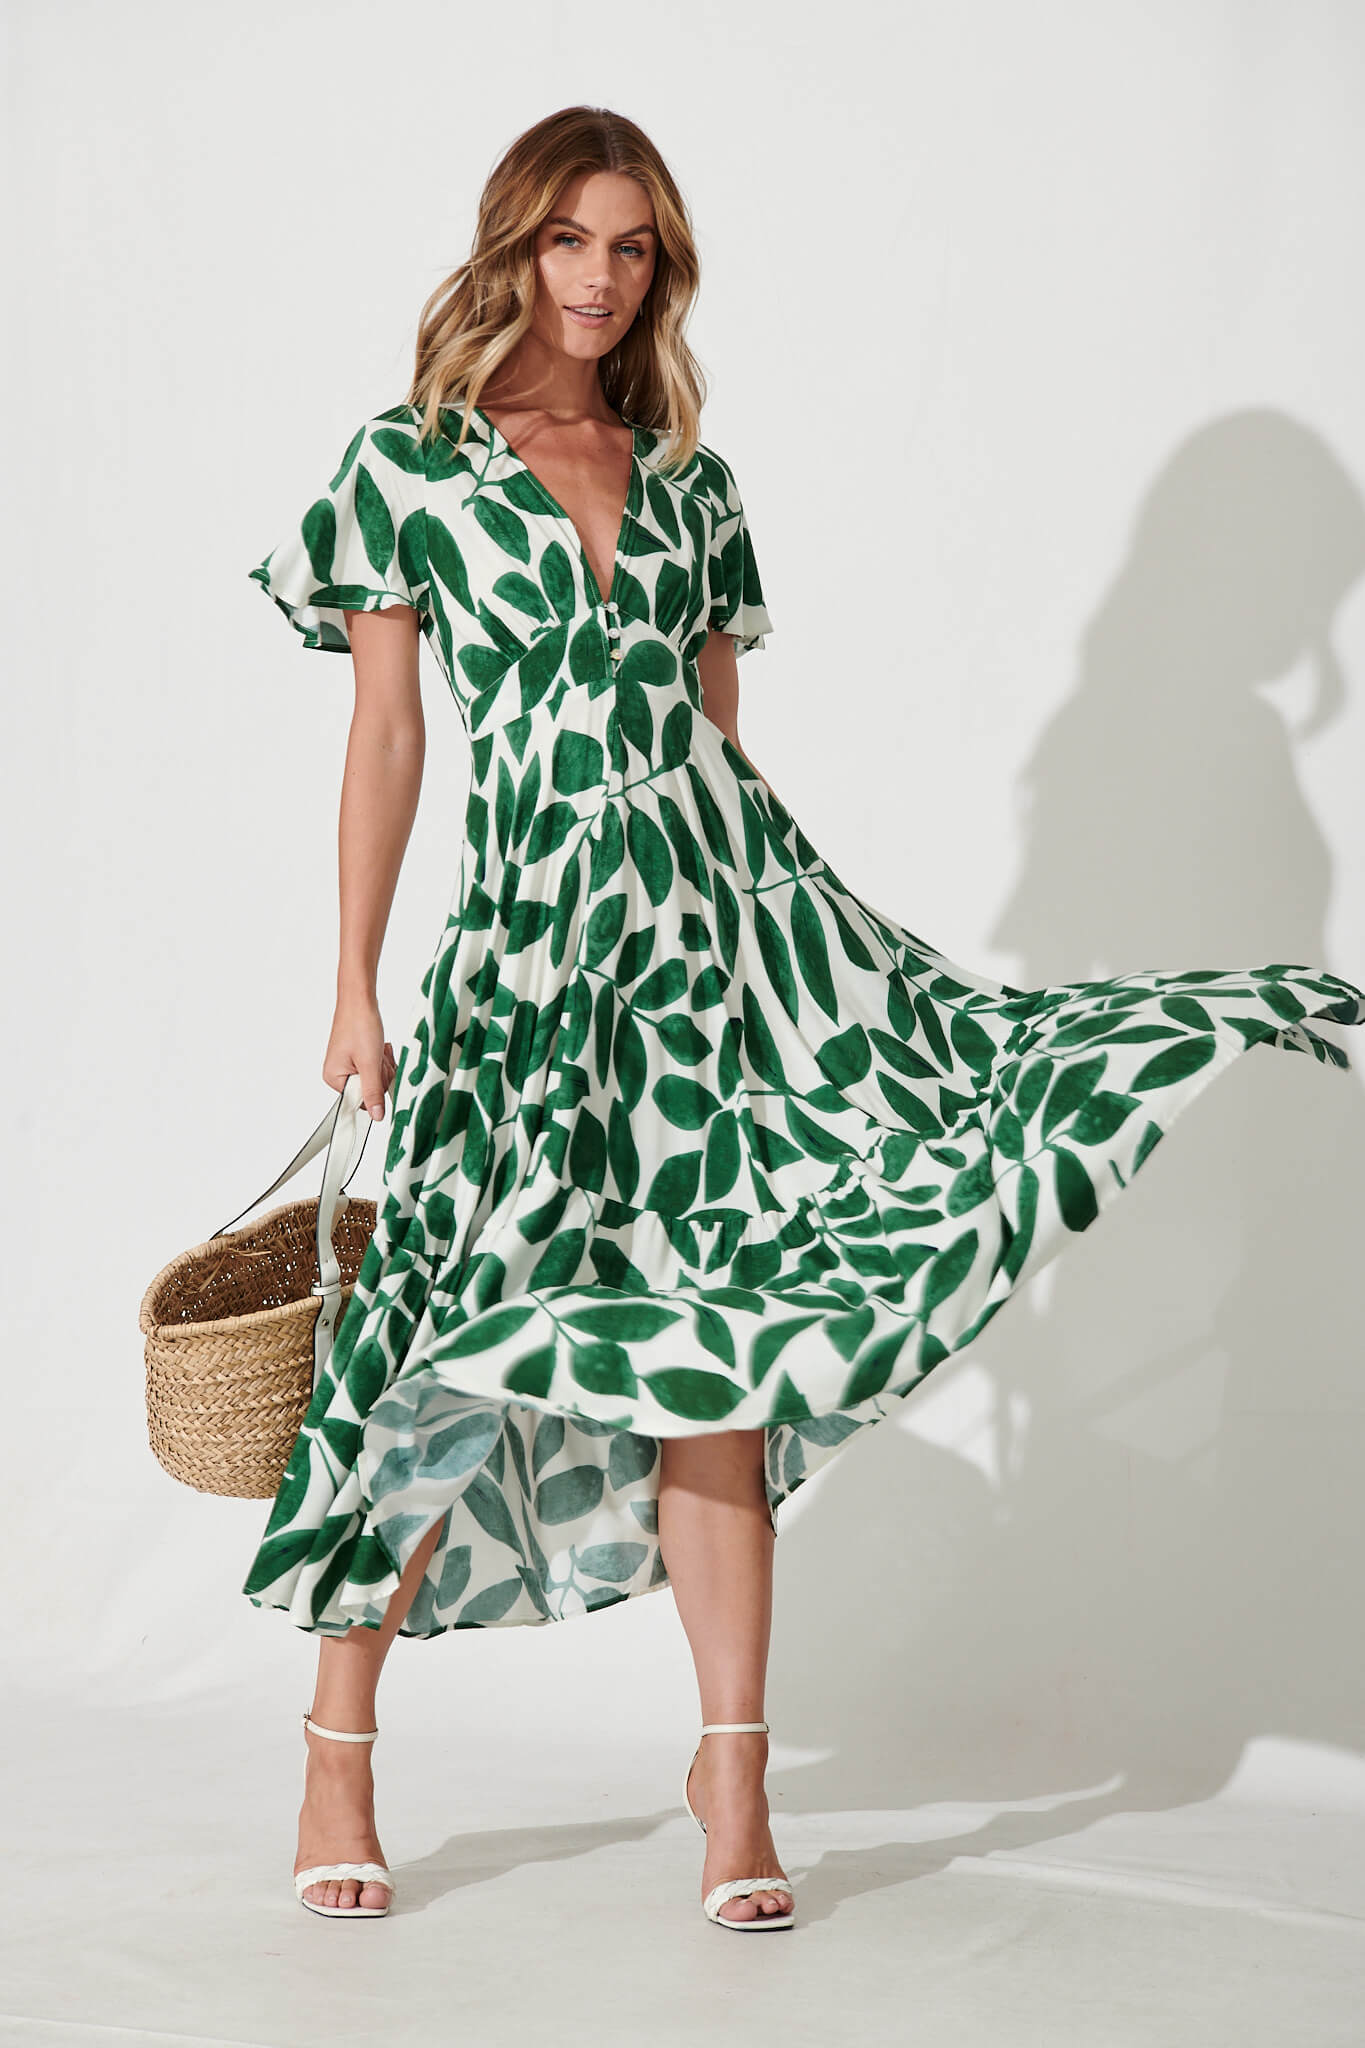 Nevada Maxi Dress In Cream With Green Leaf Print - full length